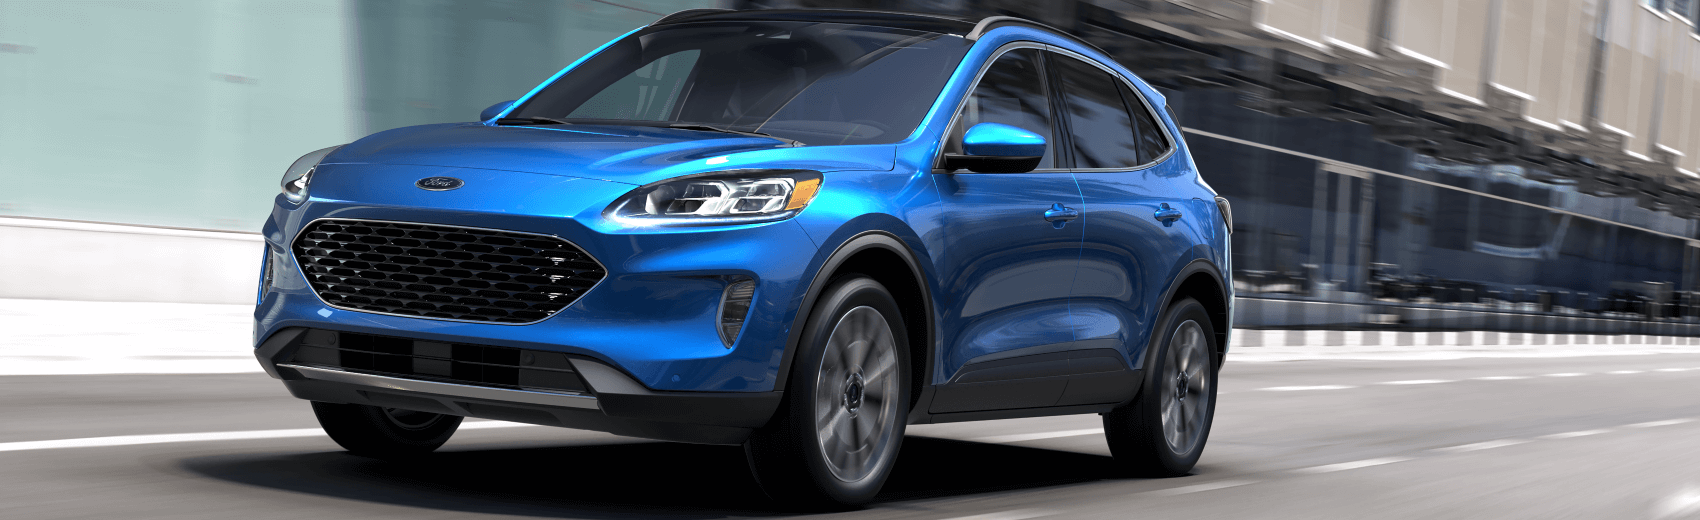 Ford Escape Lease Deals